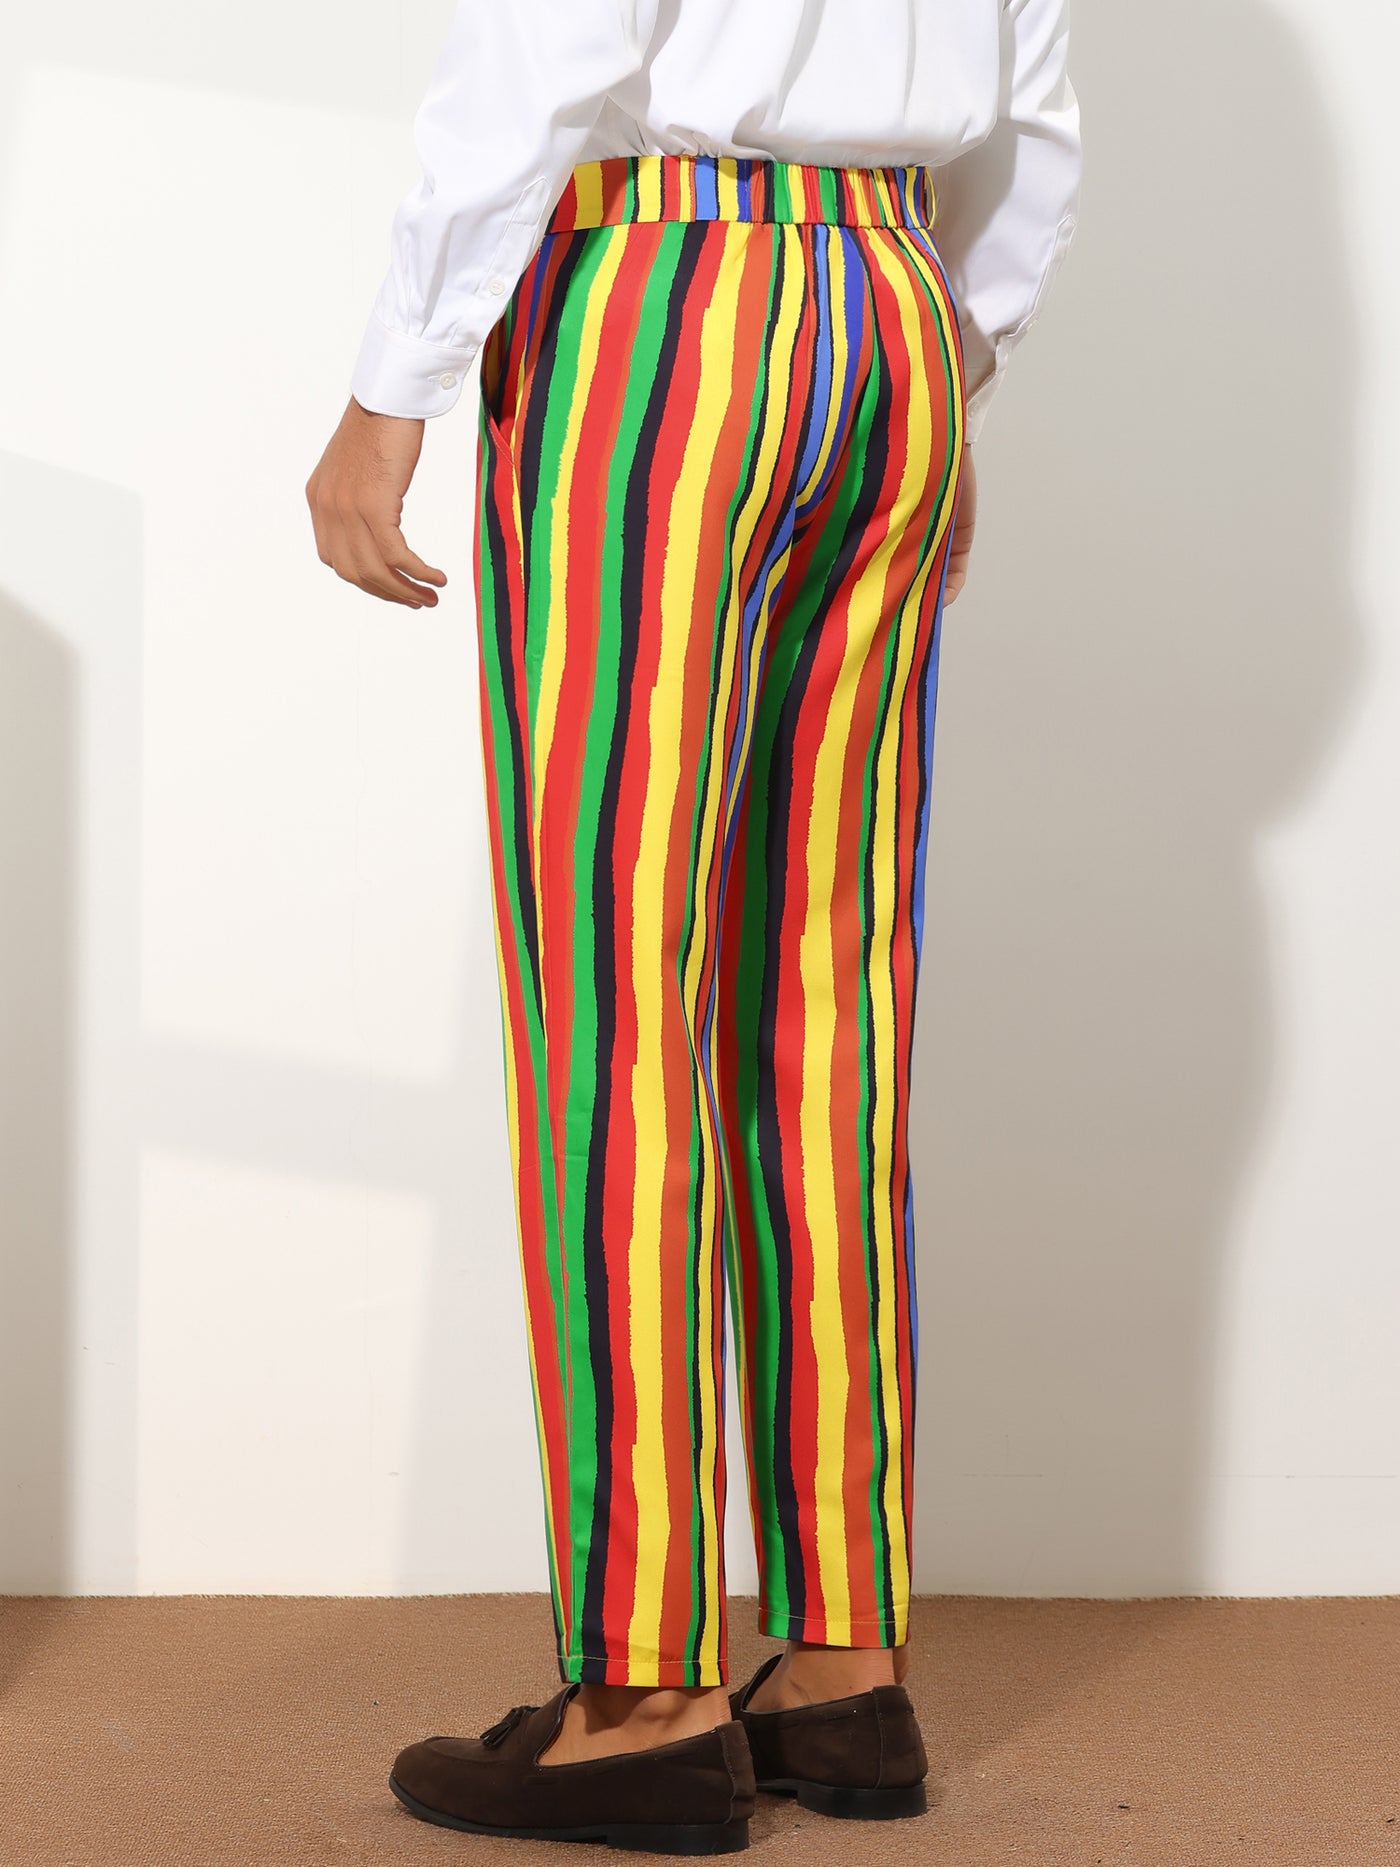 Bublédon Striped Dress Pants for Men's Regular Fit Flat Front Color Block Rainbow Stripe Trousers